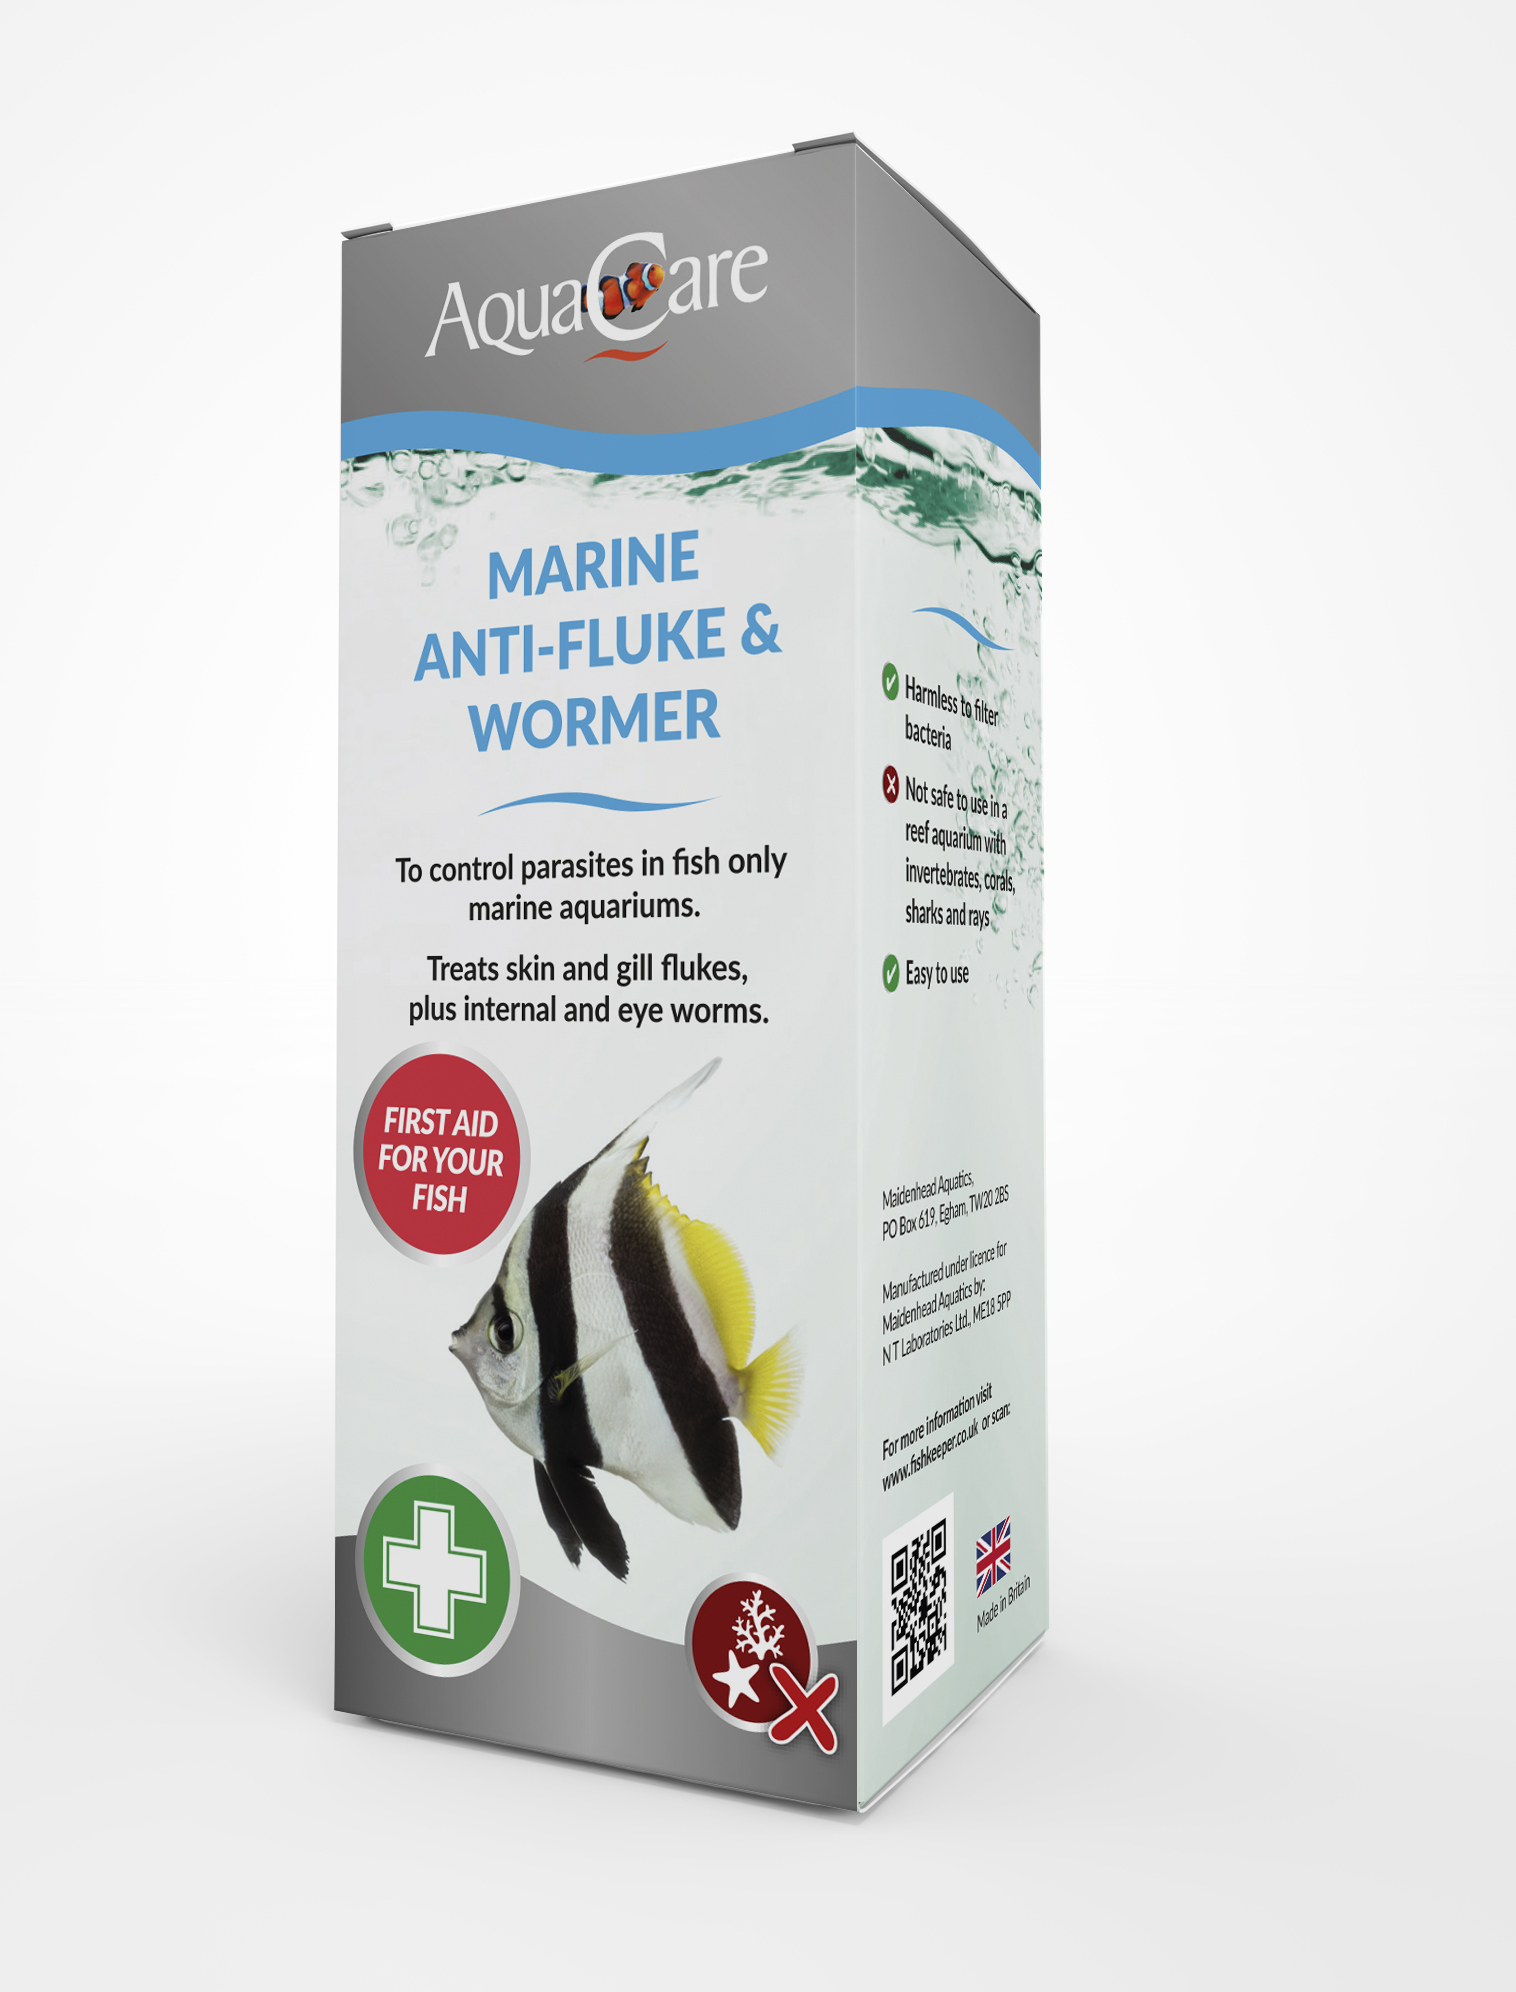 aquacare-marine-anti-fluke-wormer-1479811197.jpg